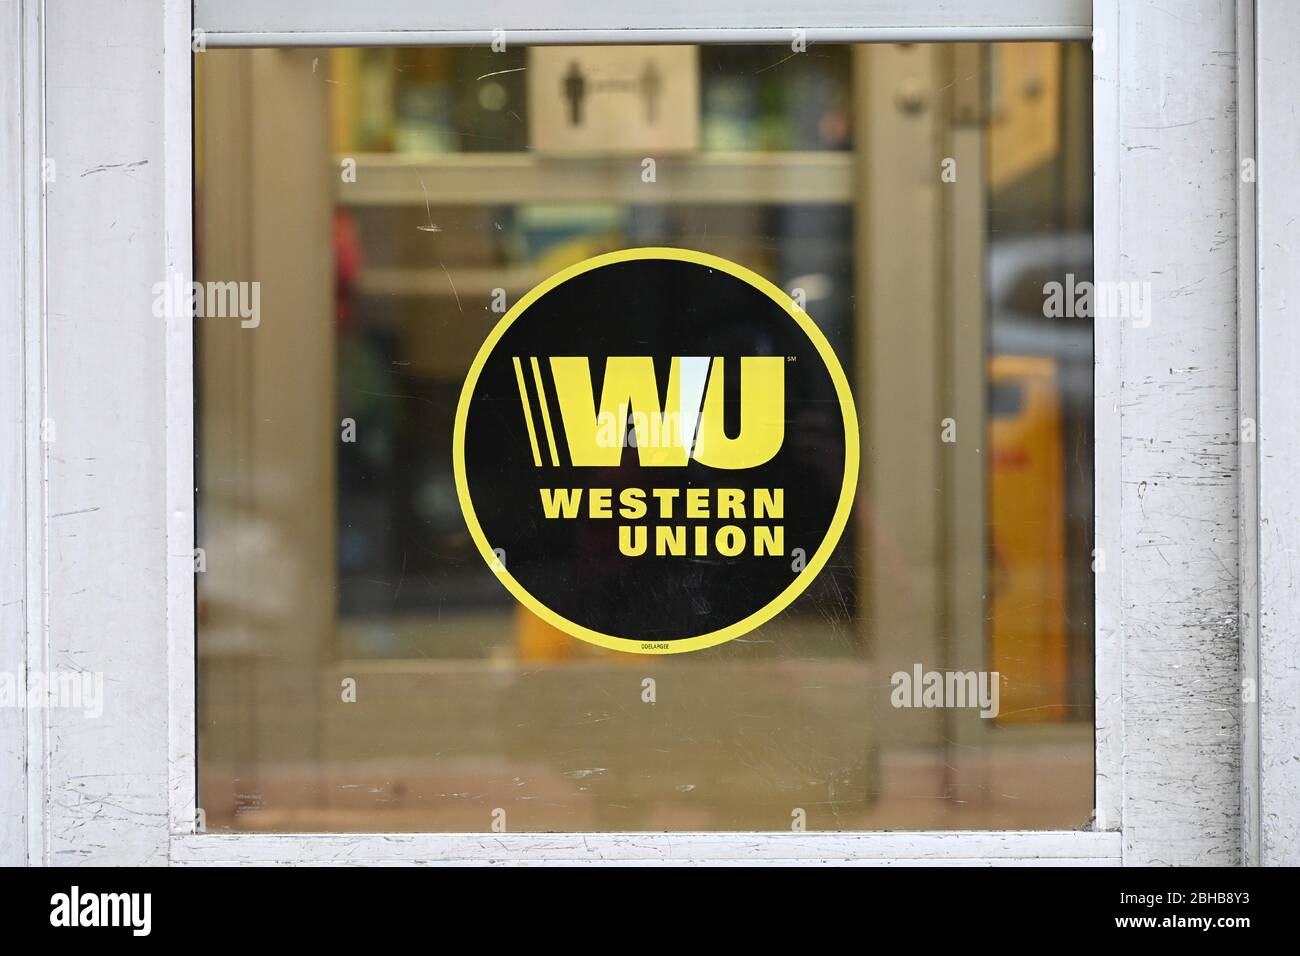 Western Union - Money transfer service - St. Augustine, Florida - Zaubee